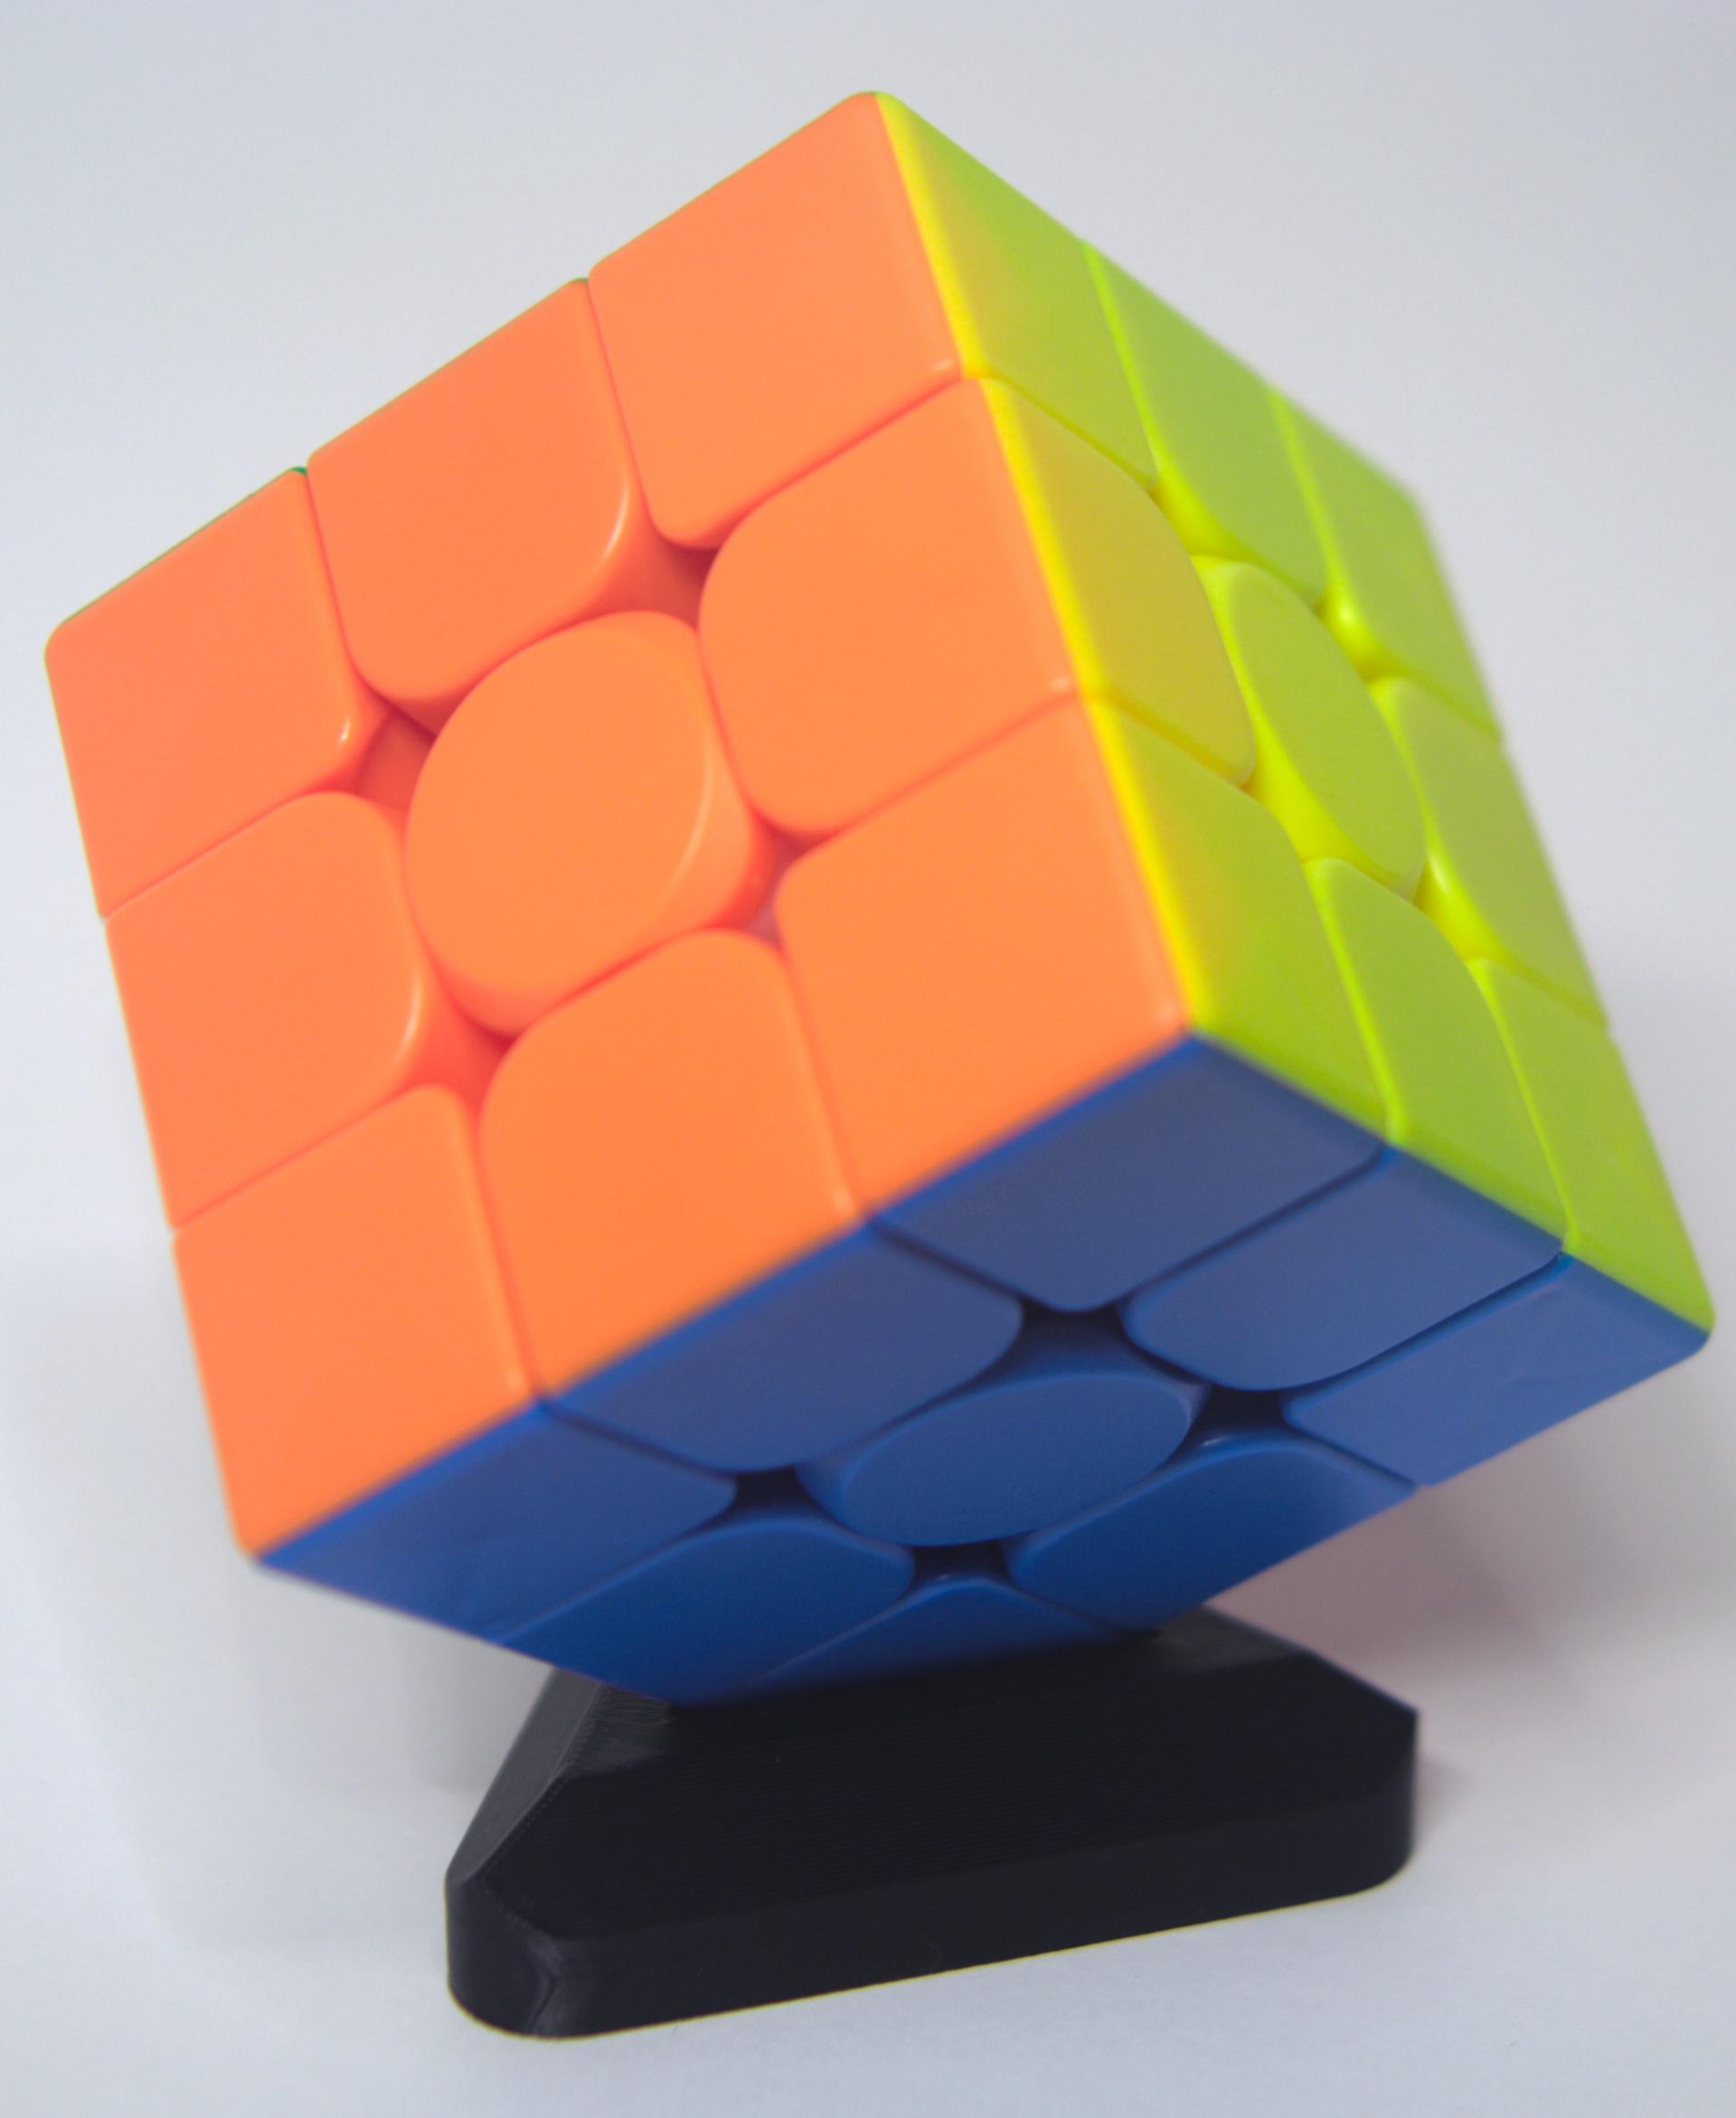 Rubik's Cube Podium Display Stand - rubrics cube podium - 3d model